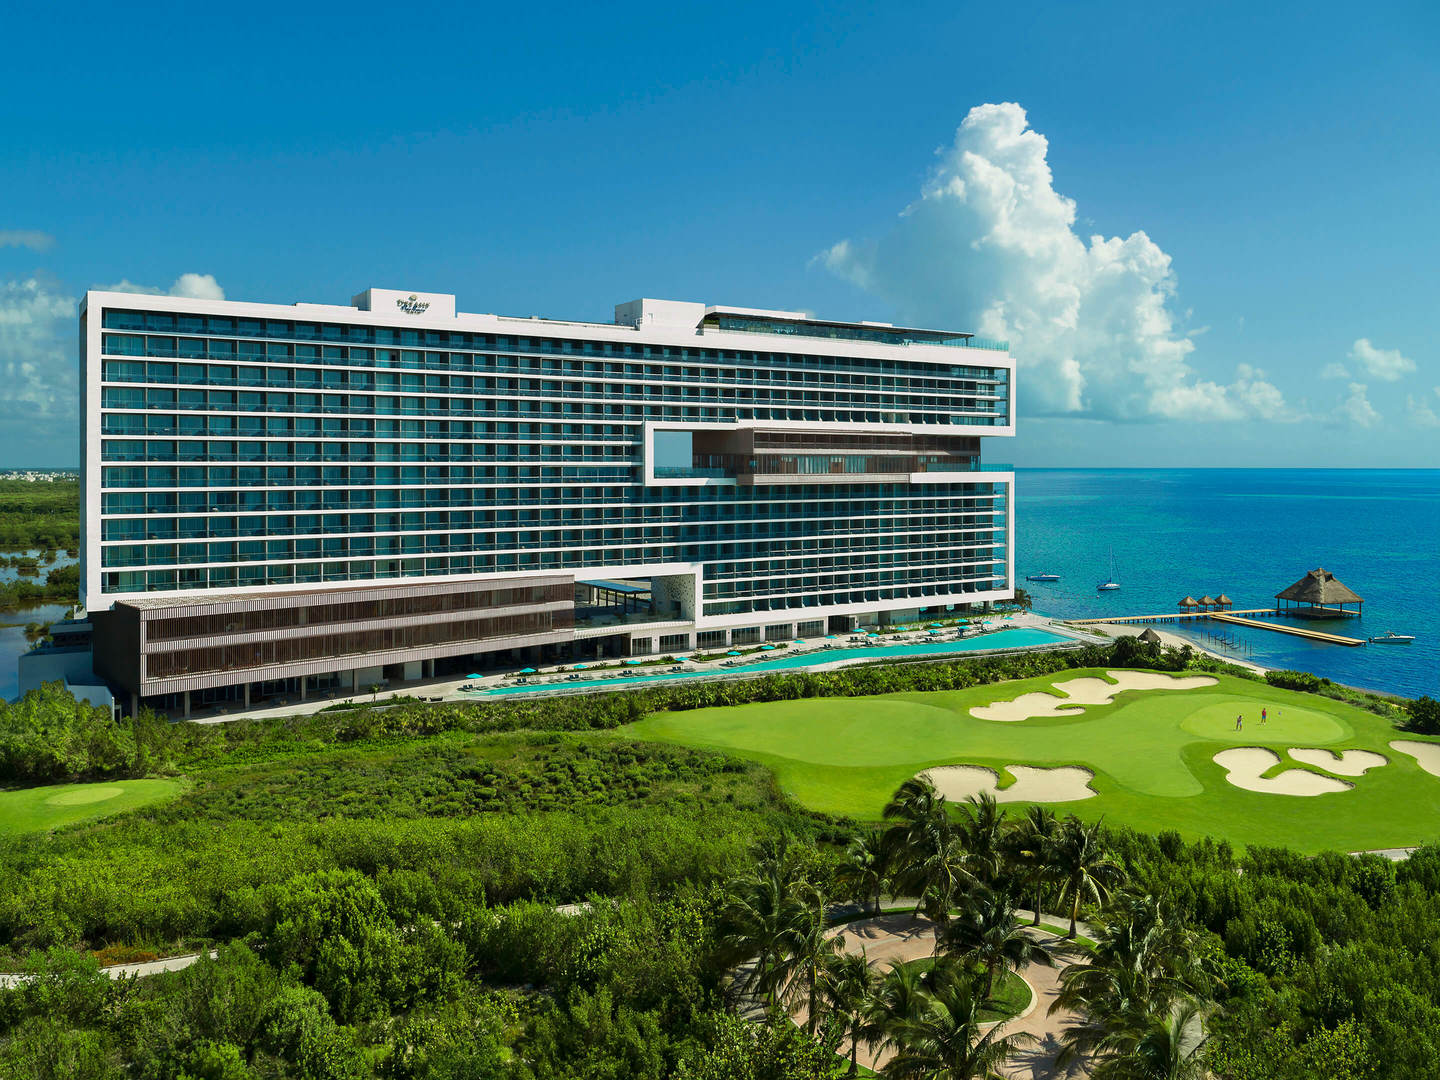 Property image of Dreams Vista Cancun Golf & Spa Resort